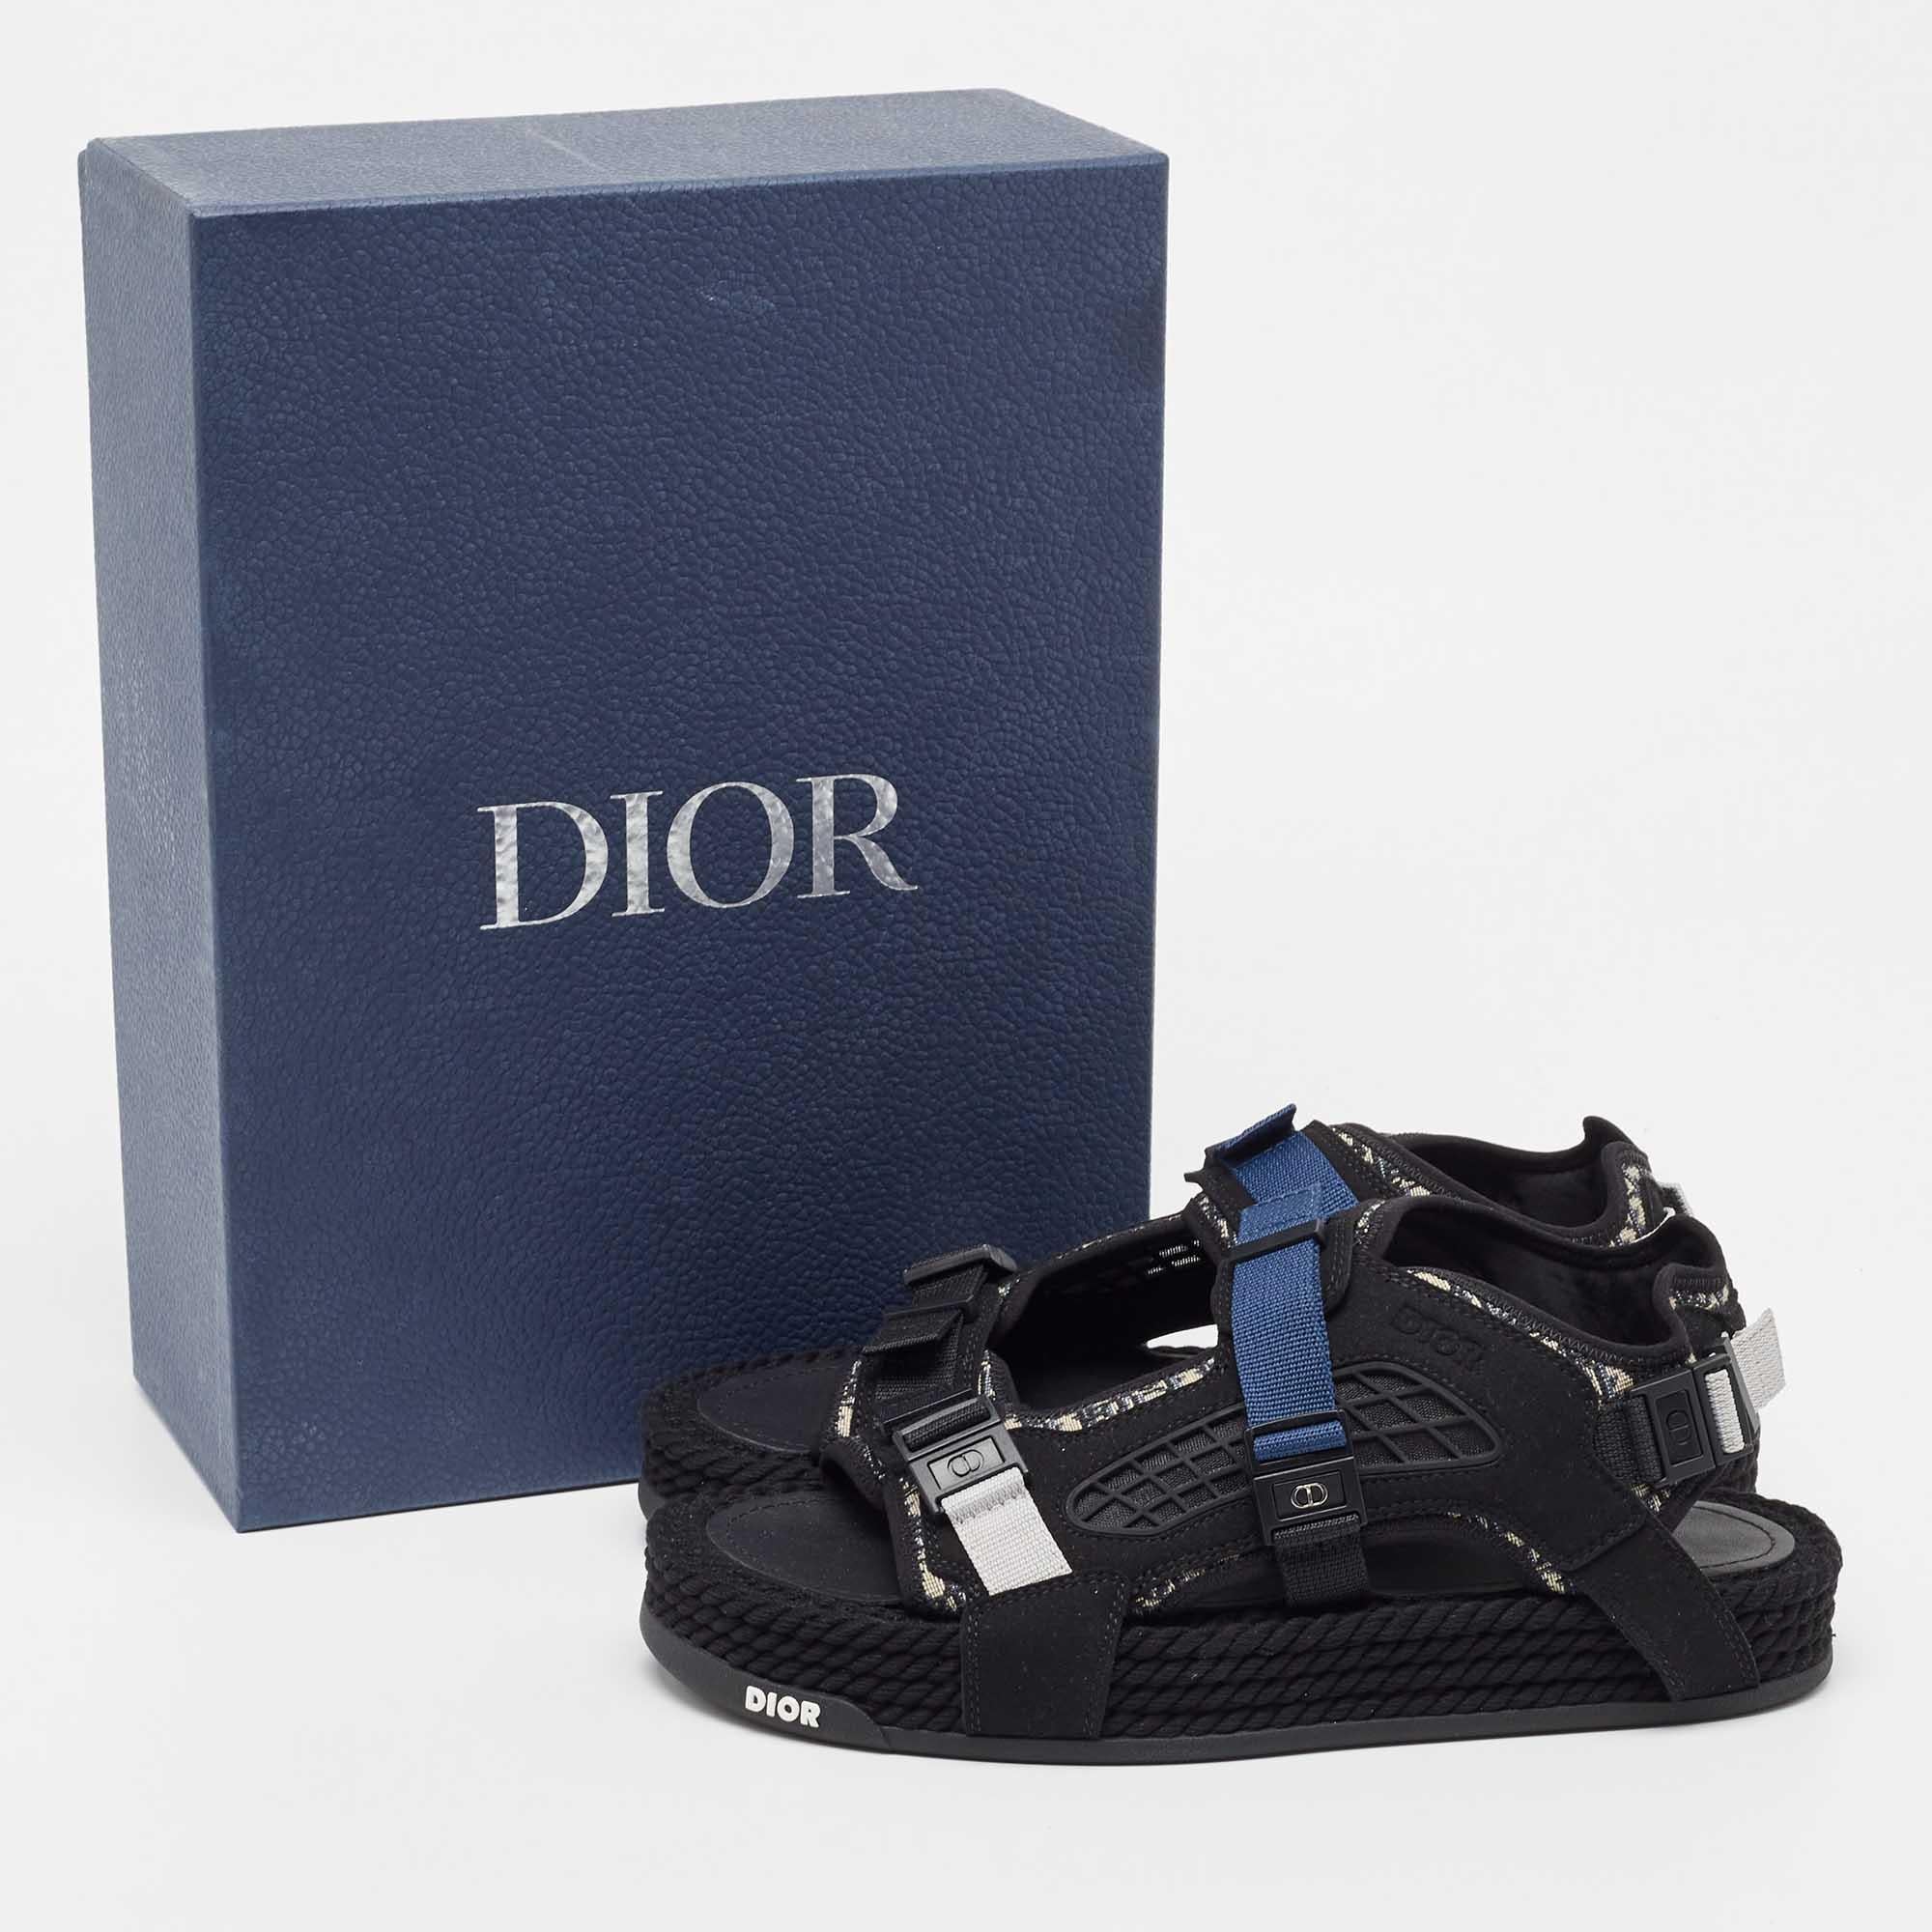 DIOR Black/Blue Jacquard Atlas Sandals Size 41 5